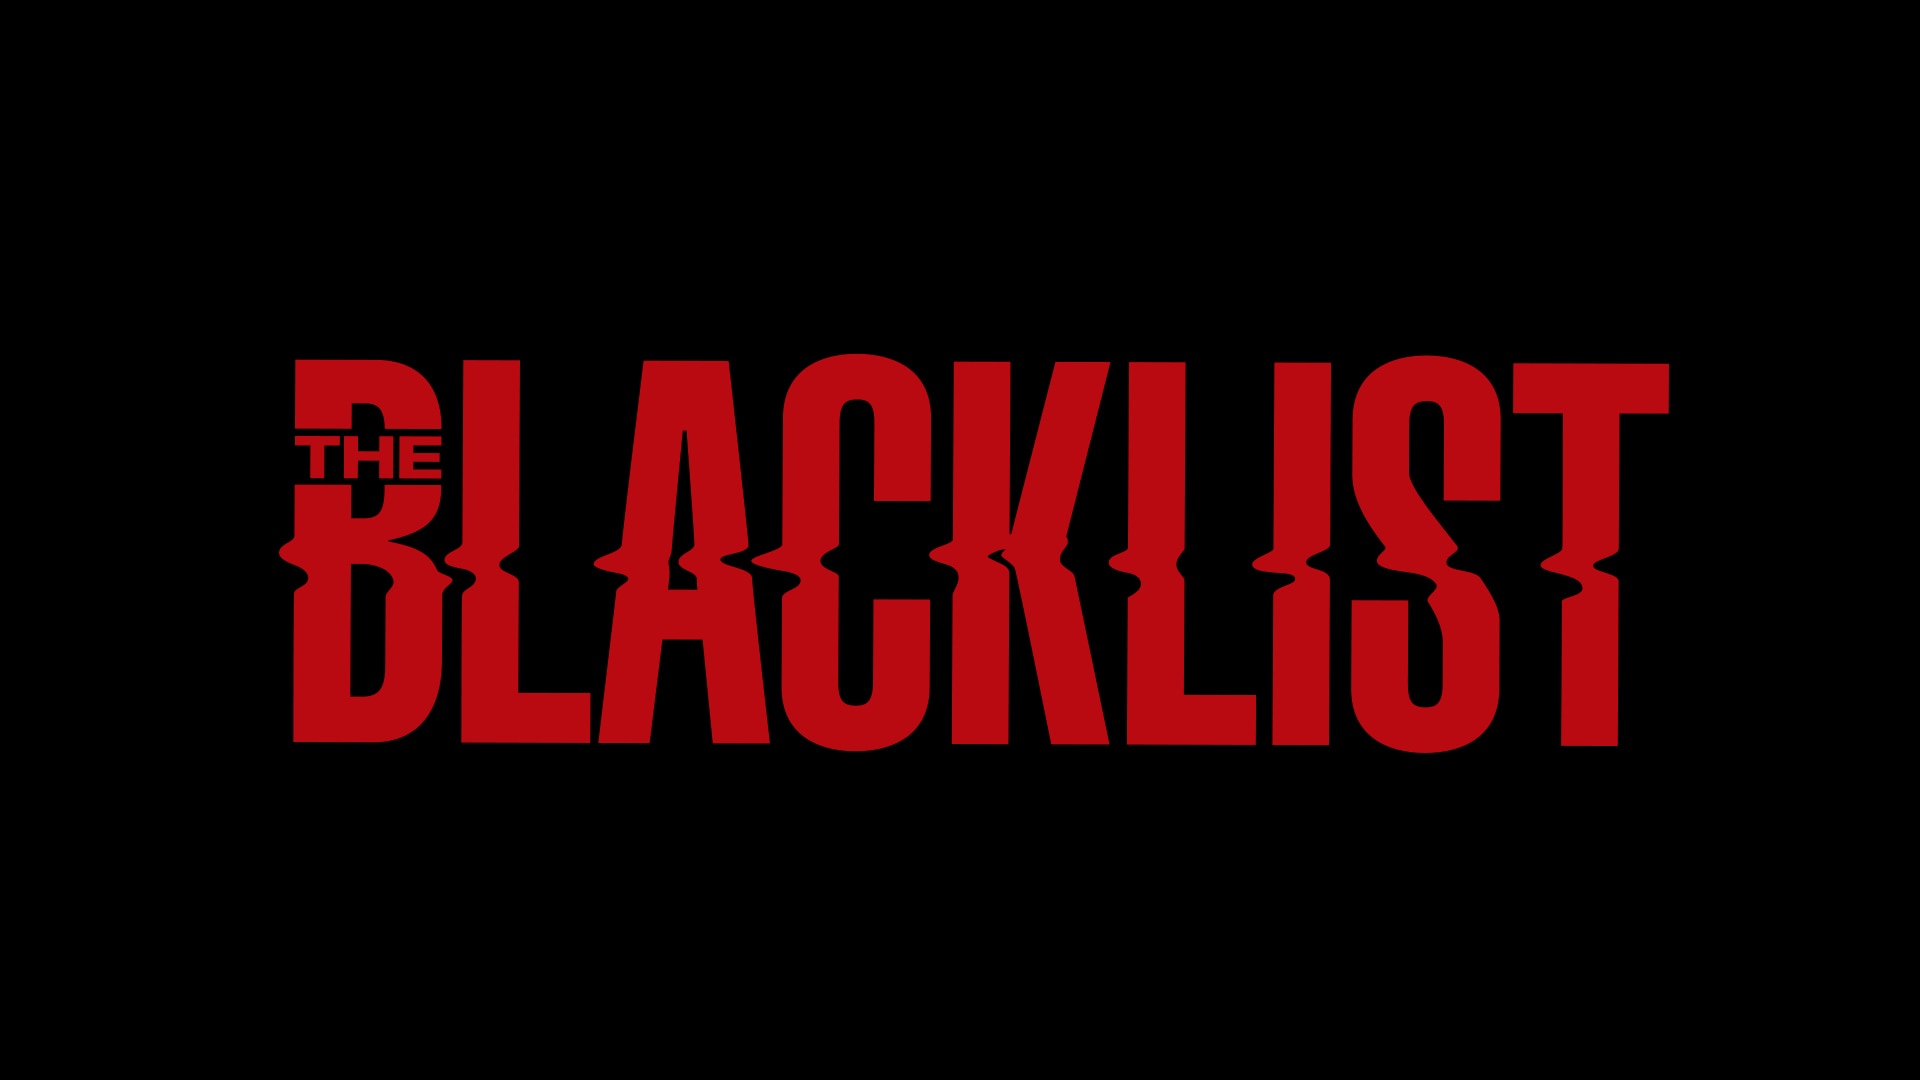 The Blacklist - NBC.com